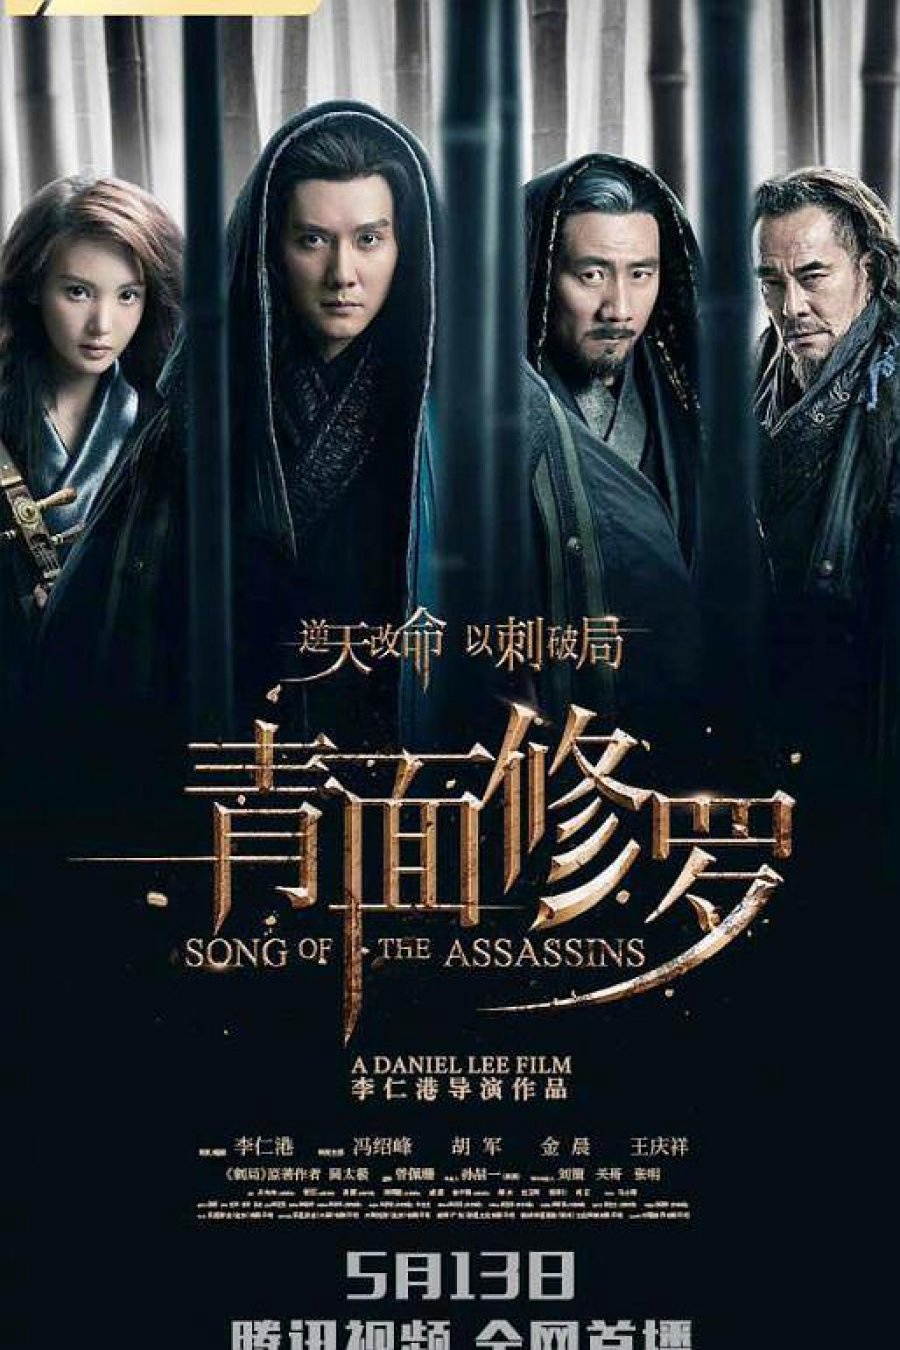 Xem Phim Thanh Diện Tu La - Song Of The Assassins - online truc tuyen vietsub mien phi hinh anh 1